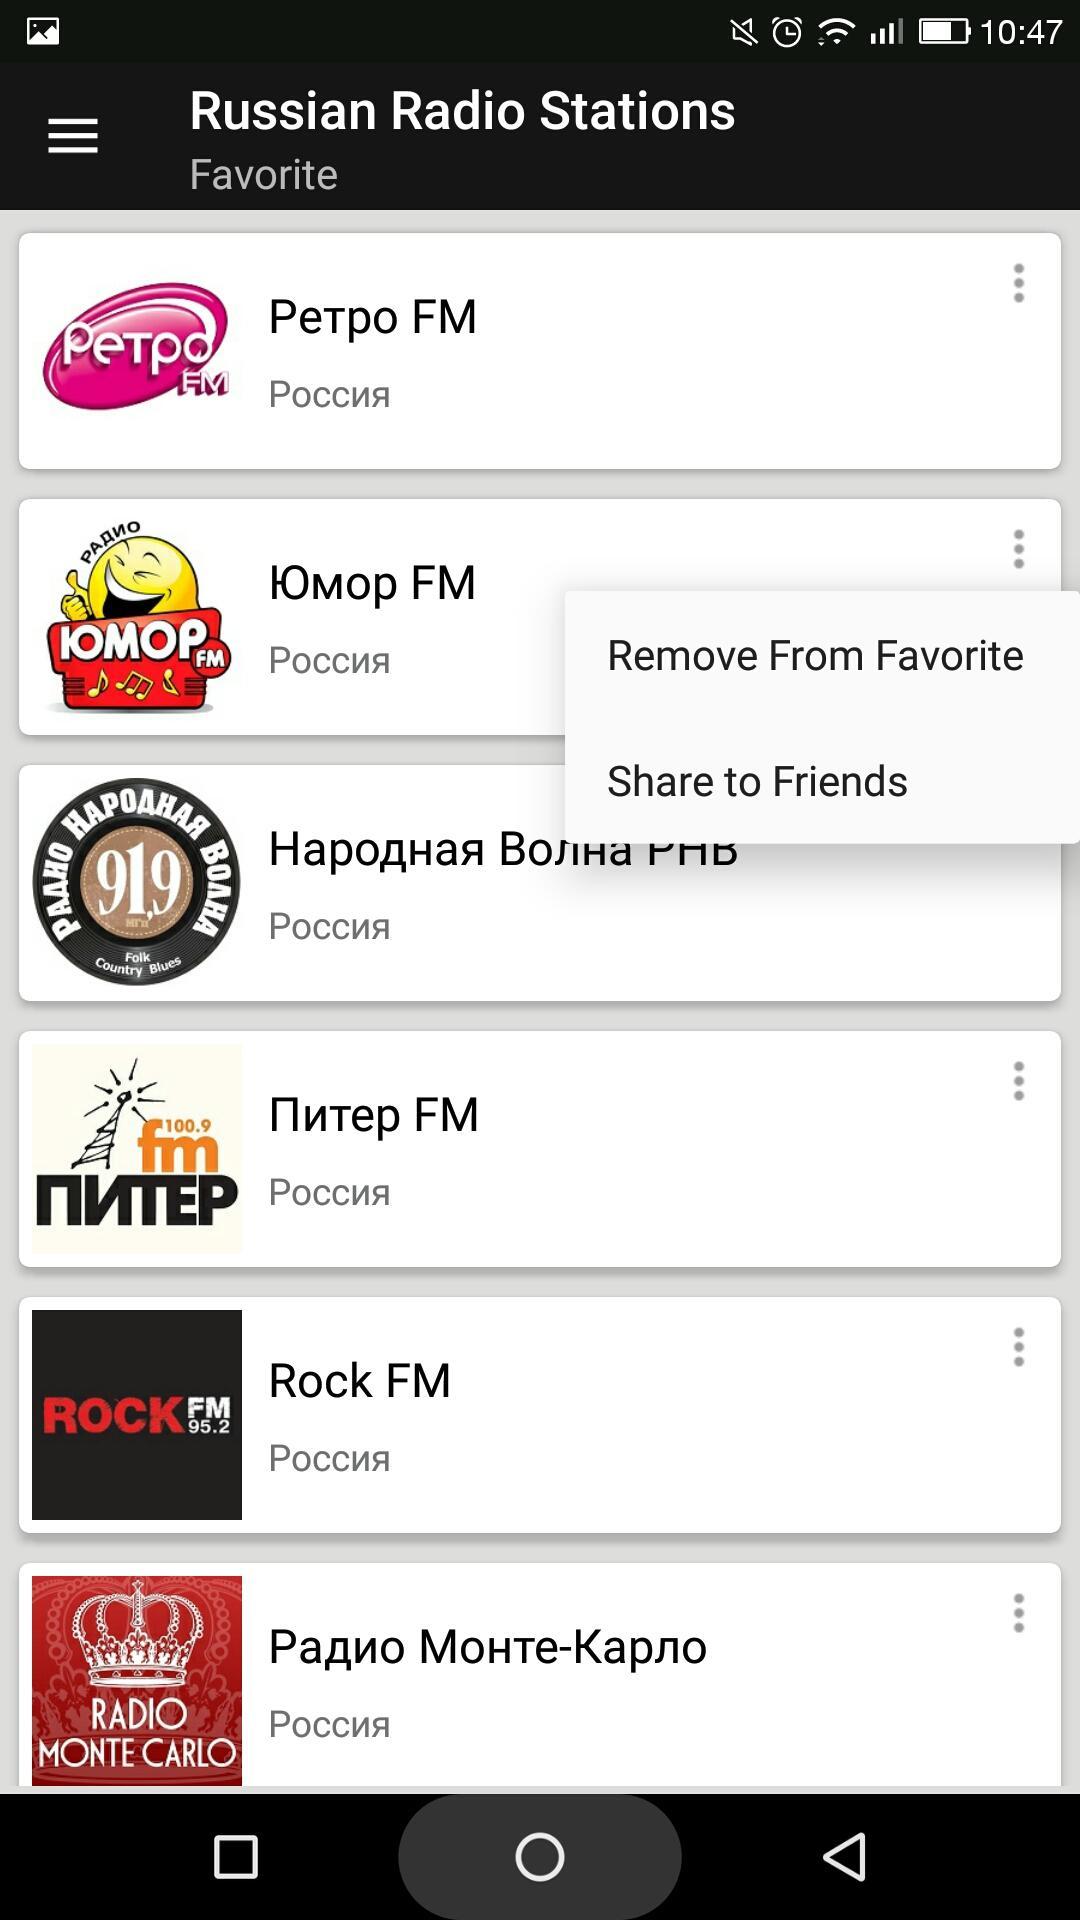 Russian Radio Stations 6.0.2 Screenshot 6